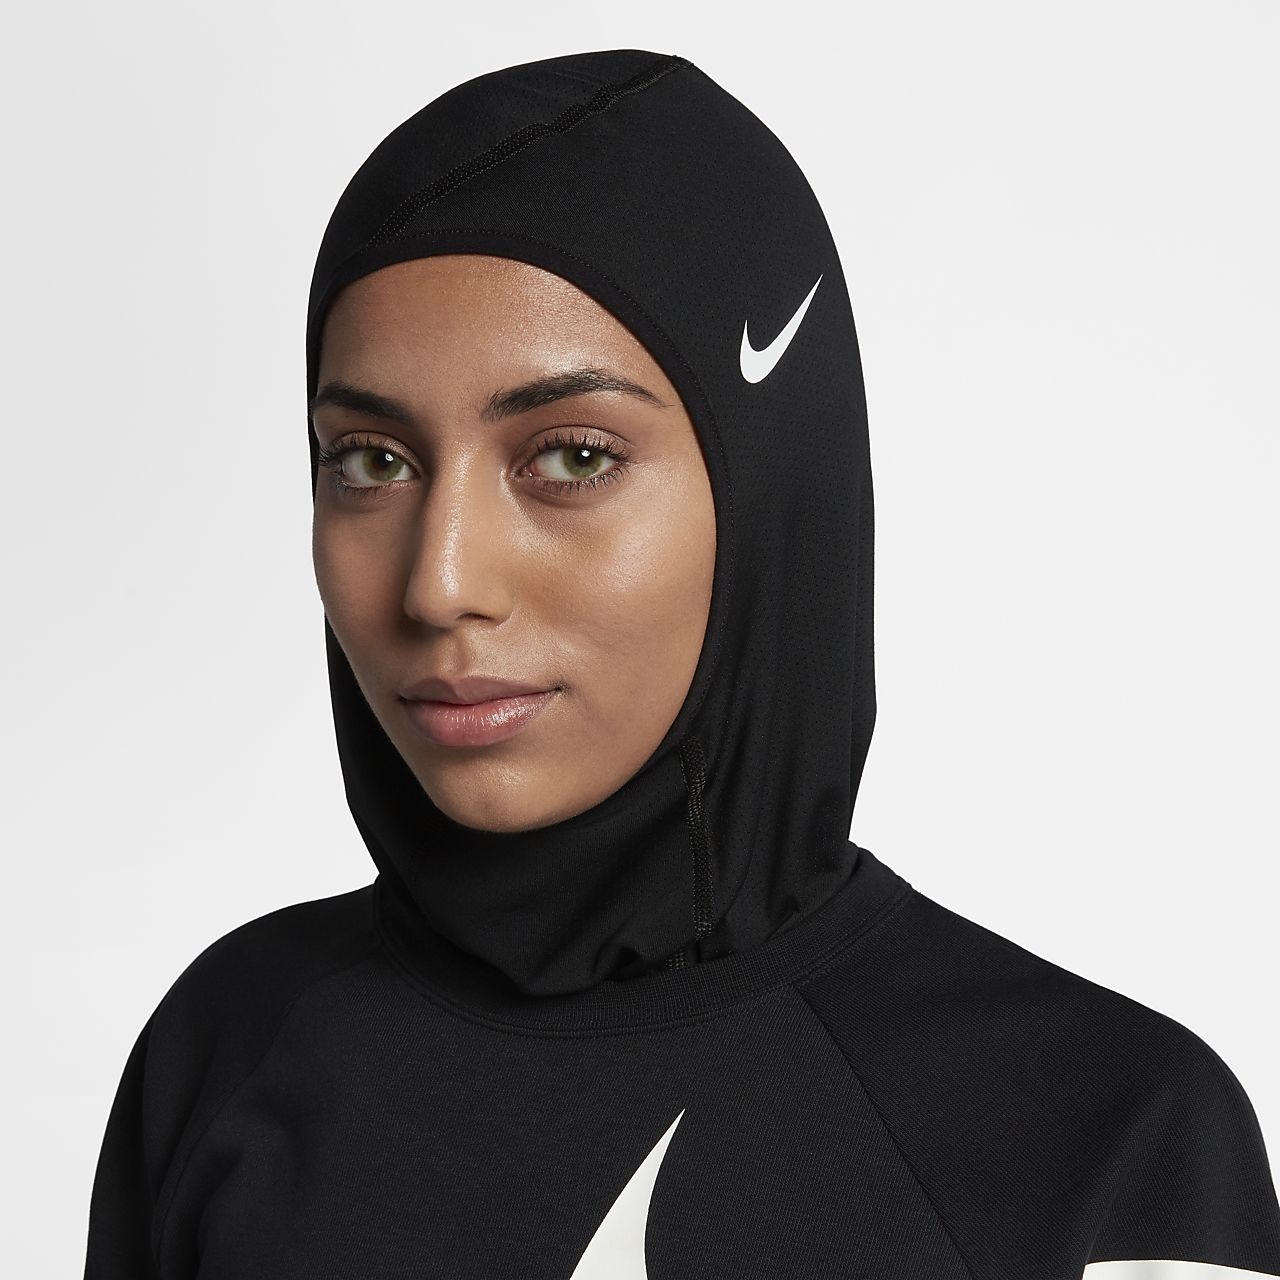  Nike  Pro Women s Hijab  Nike  com GB